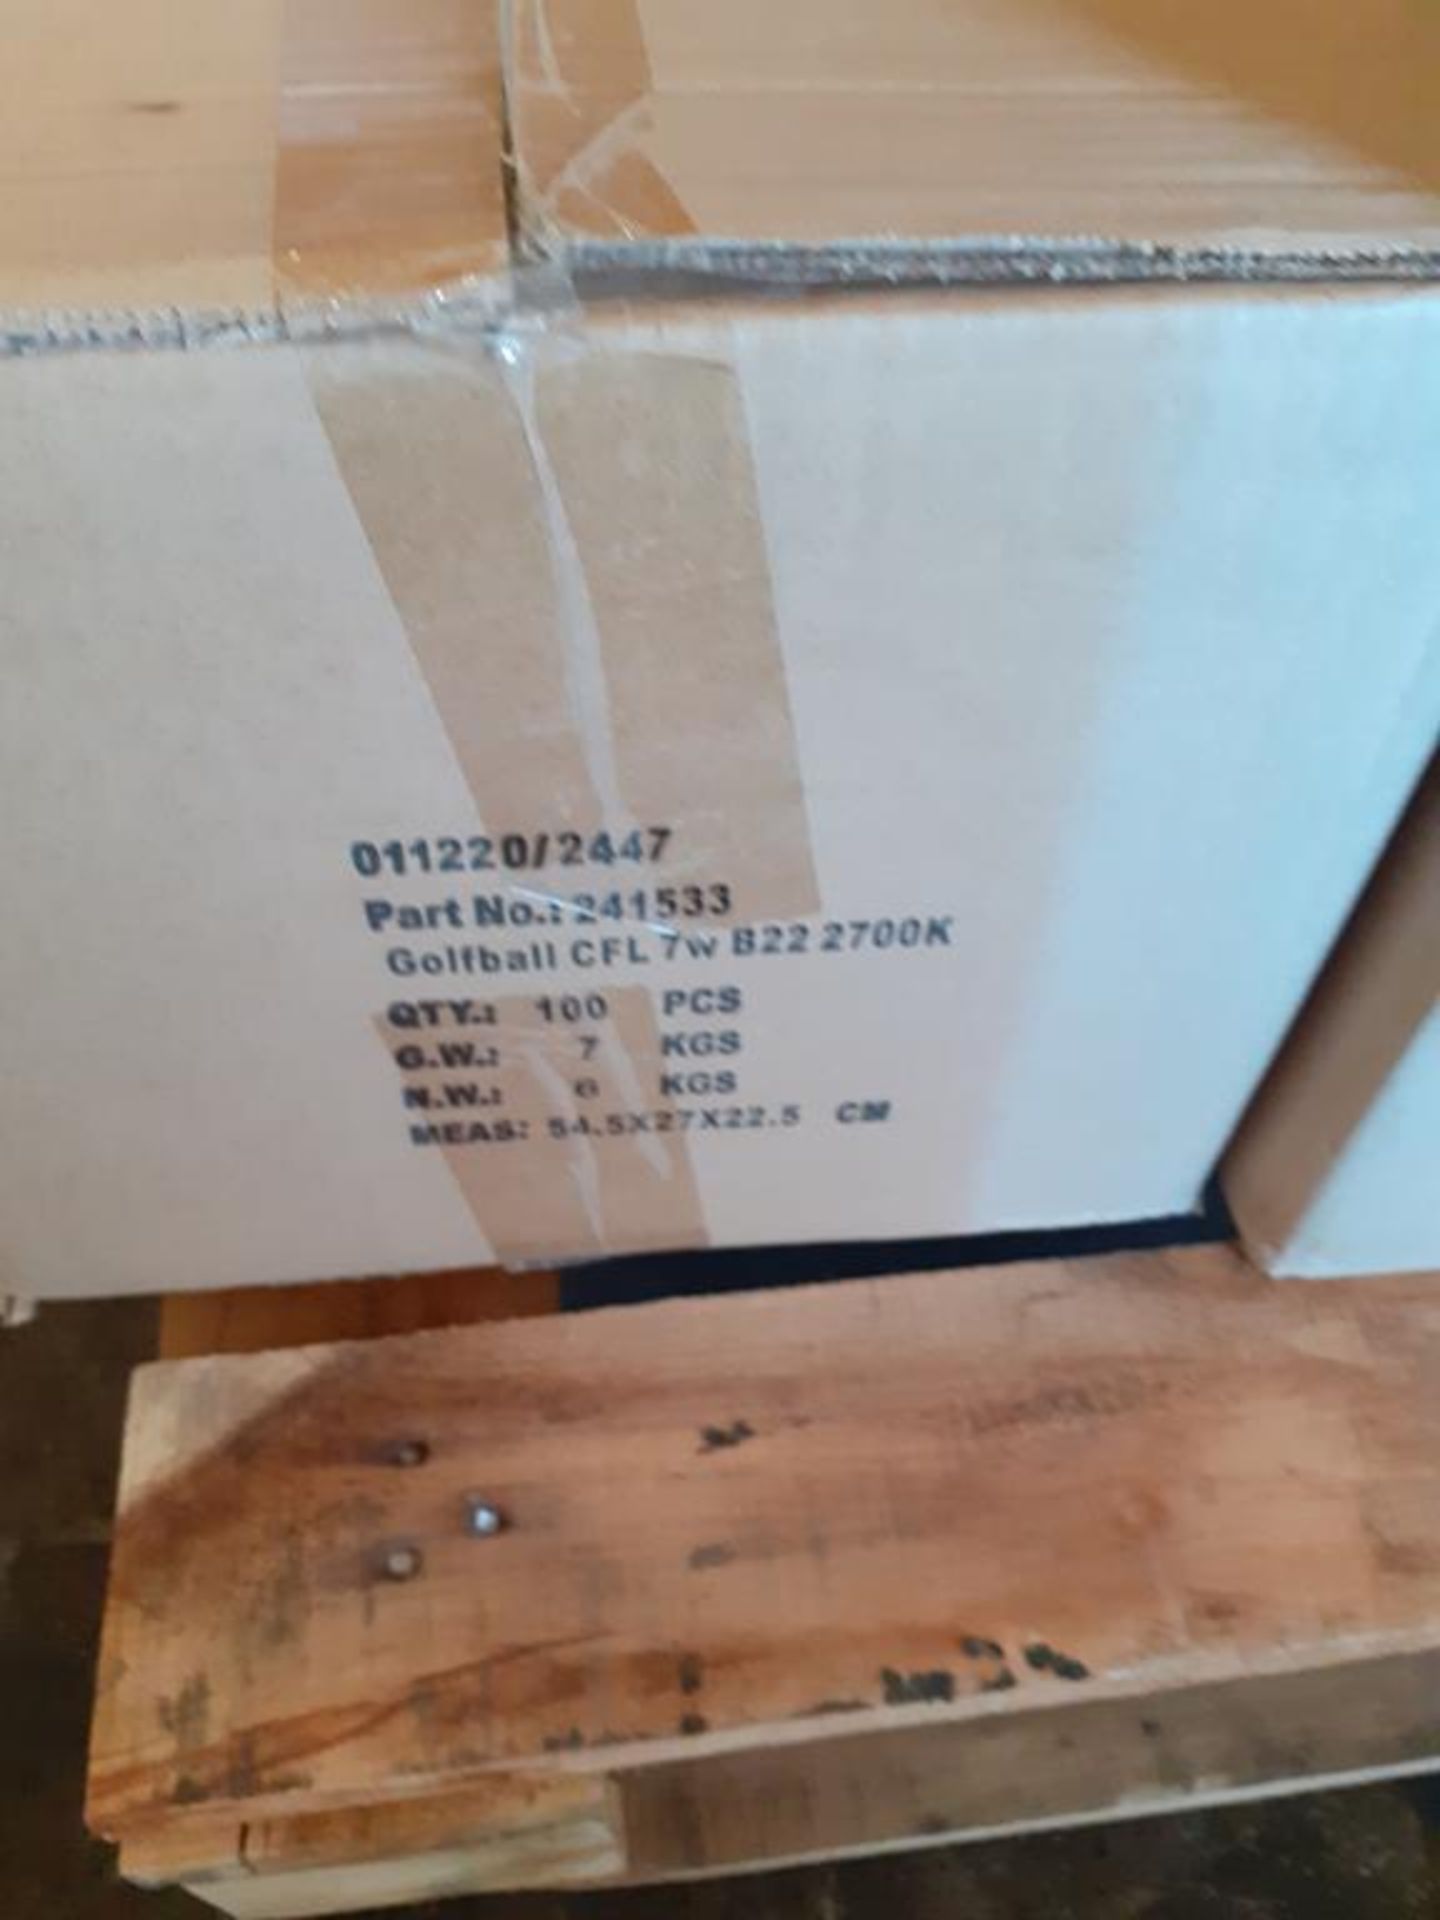 3x boxes of Lumineux Golf Ball 7W B22 2700K Warm White Bulbs (100pcs per box, 1 box contains 80pcs) - Image 2 of 4